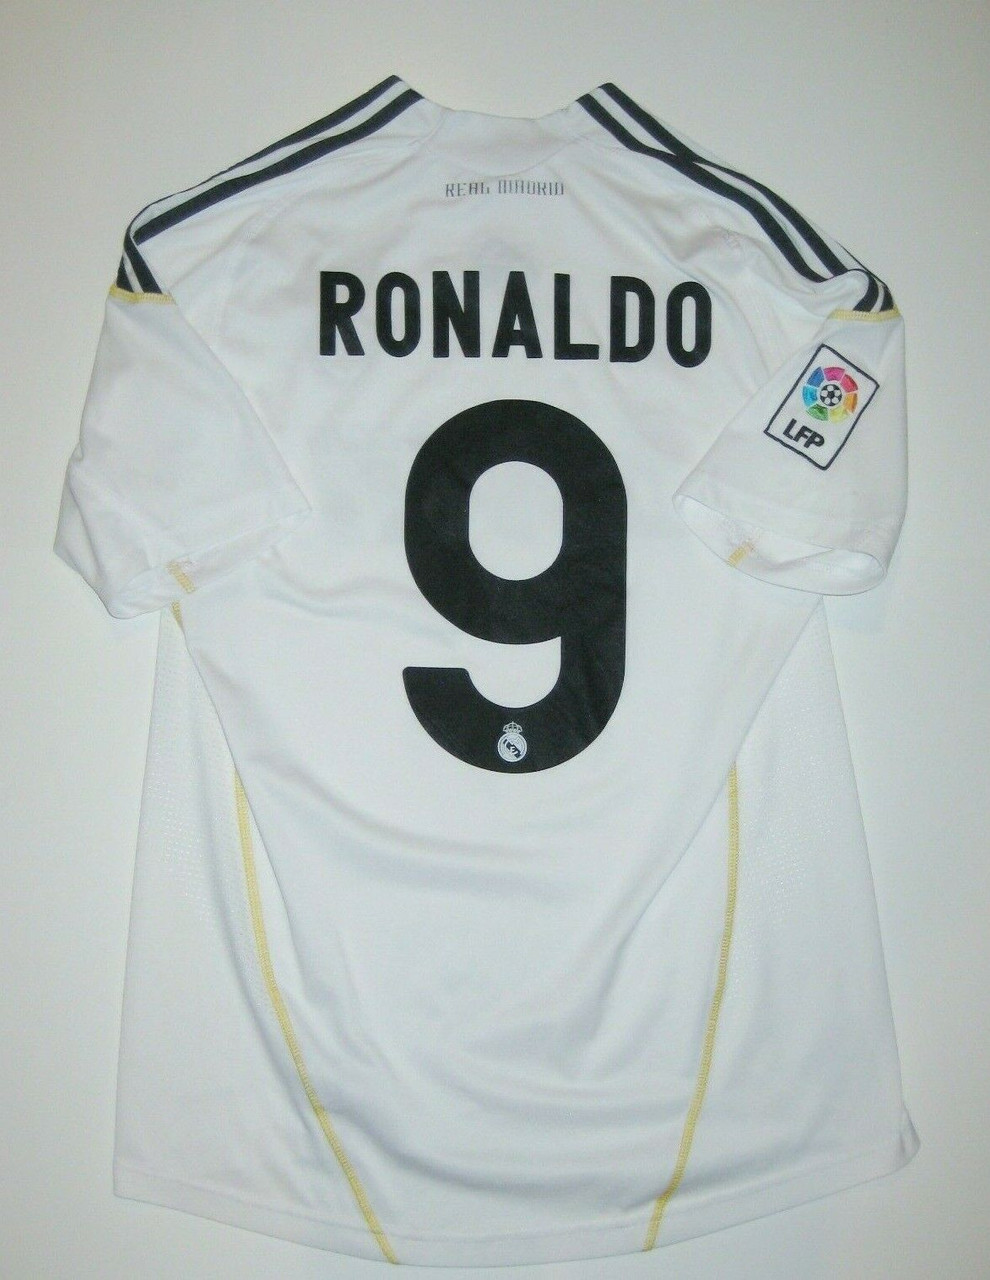 real madrid ronaldo jersey adidas